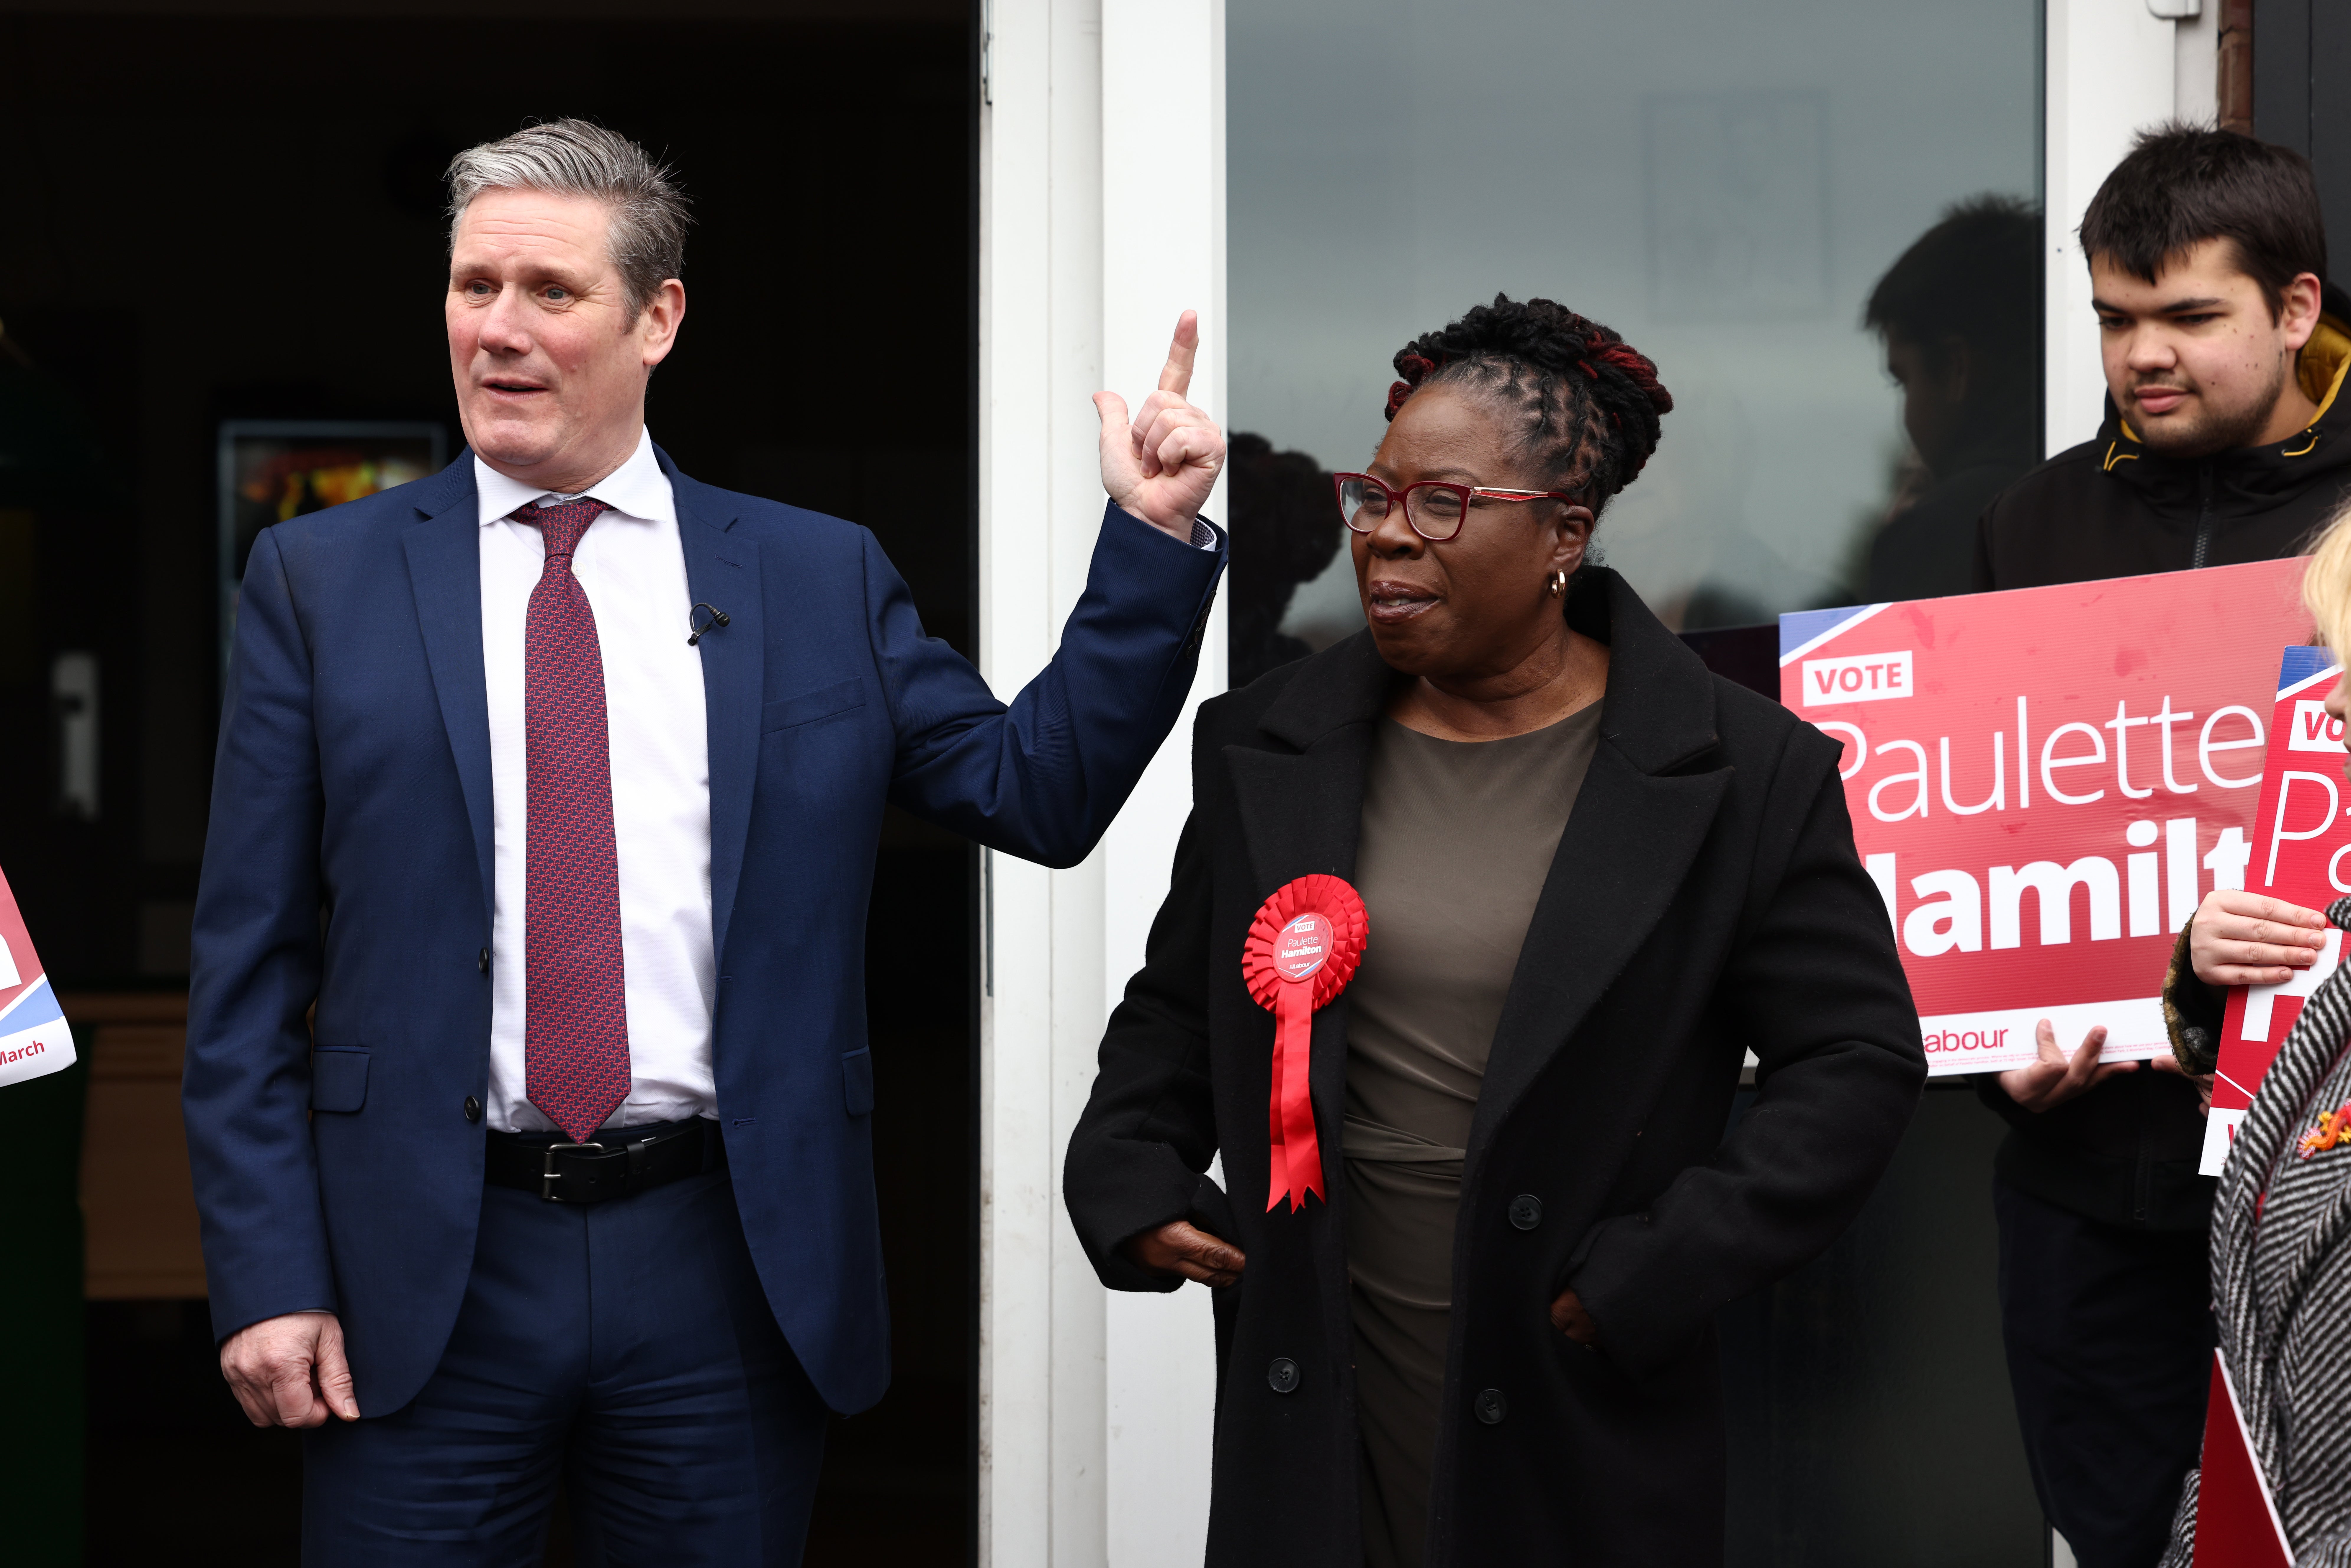 Keir Starmer joins Labour’s newest MP Paulette Hamilton after she won the Birmingham Erdington by-election on 4 March 2022